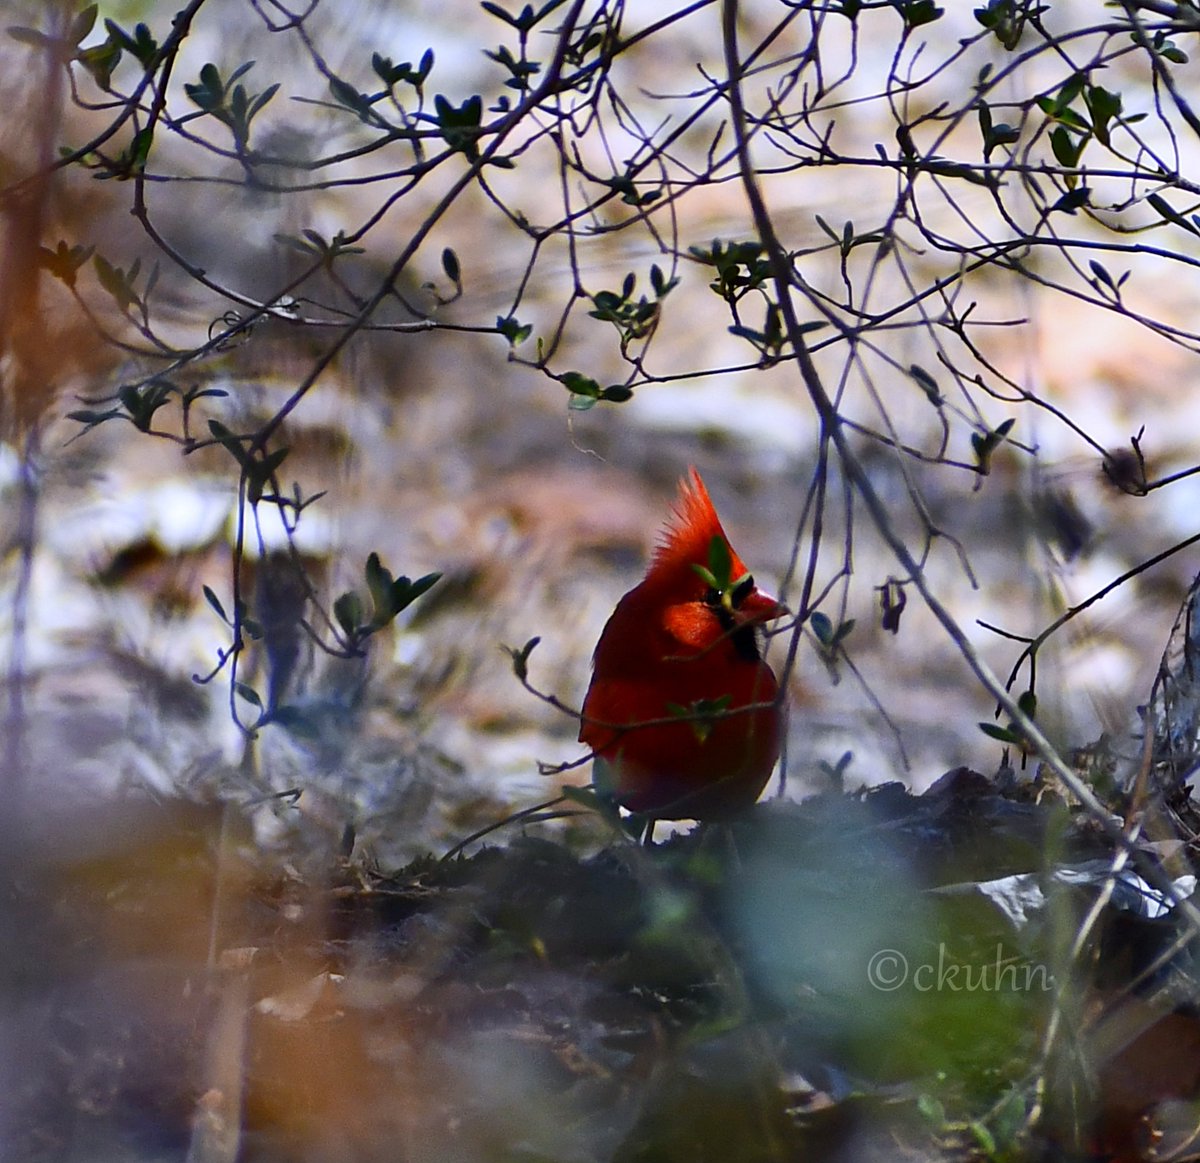 A Northern Cardinal hiding in the shade for #MondayRed. 🐦🌿 #Birds #MyYardMyBirds #NaturePhotography #BirdsOfTwitter